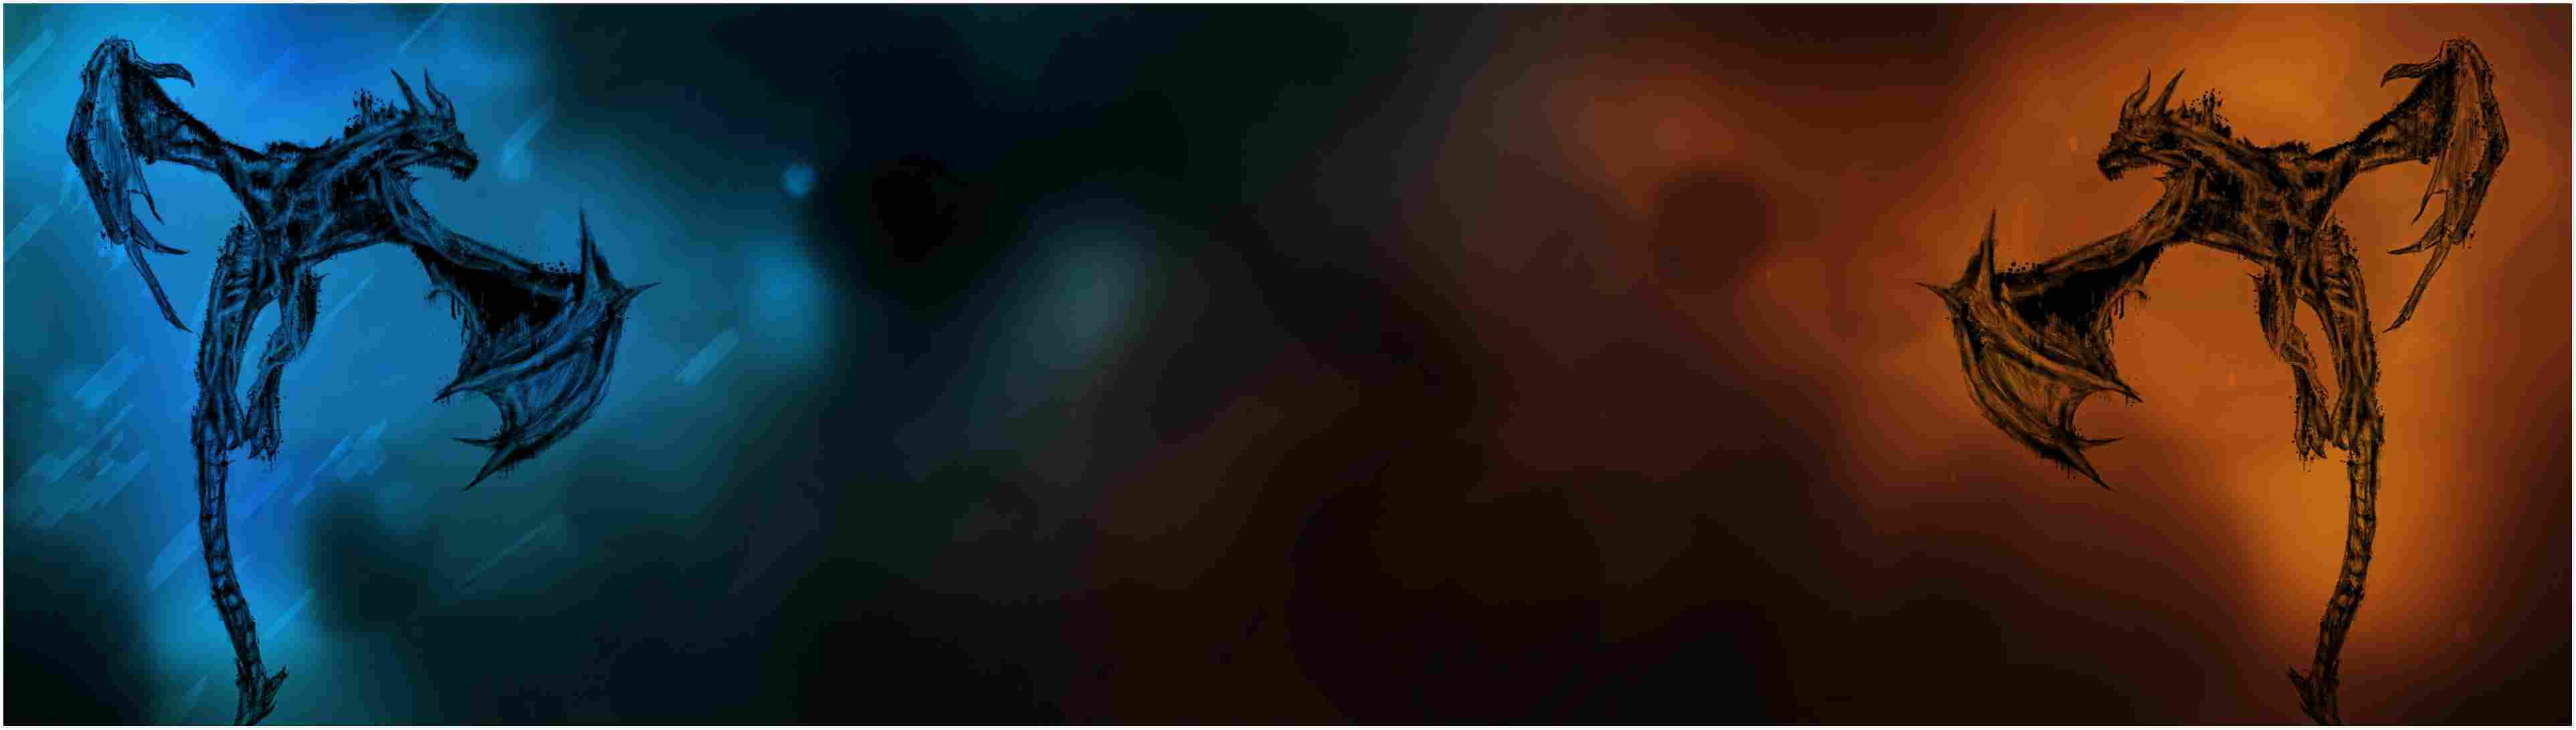 sfondo 2 monitore,blu,nero,natura,verde,cielo